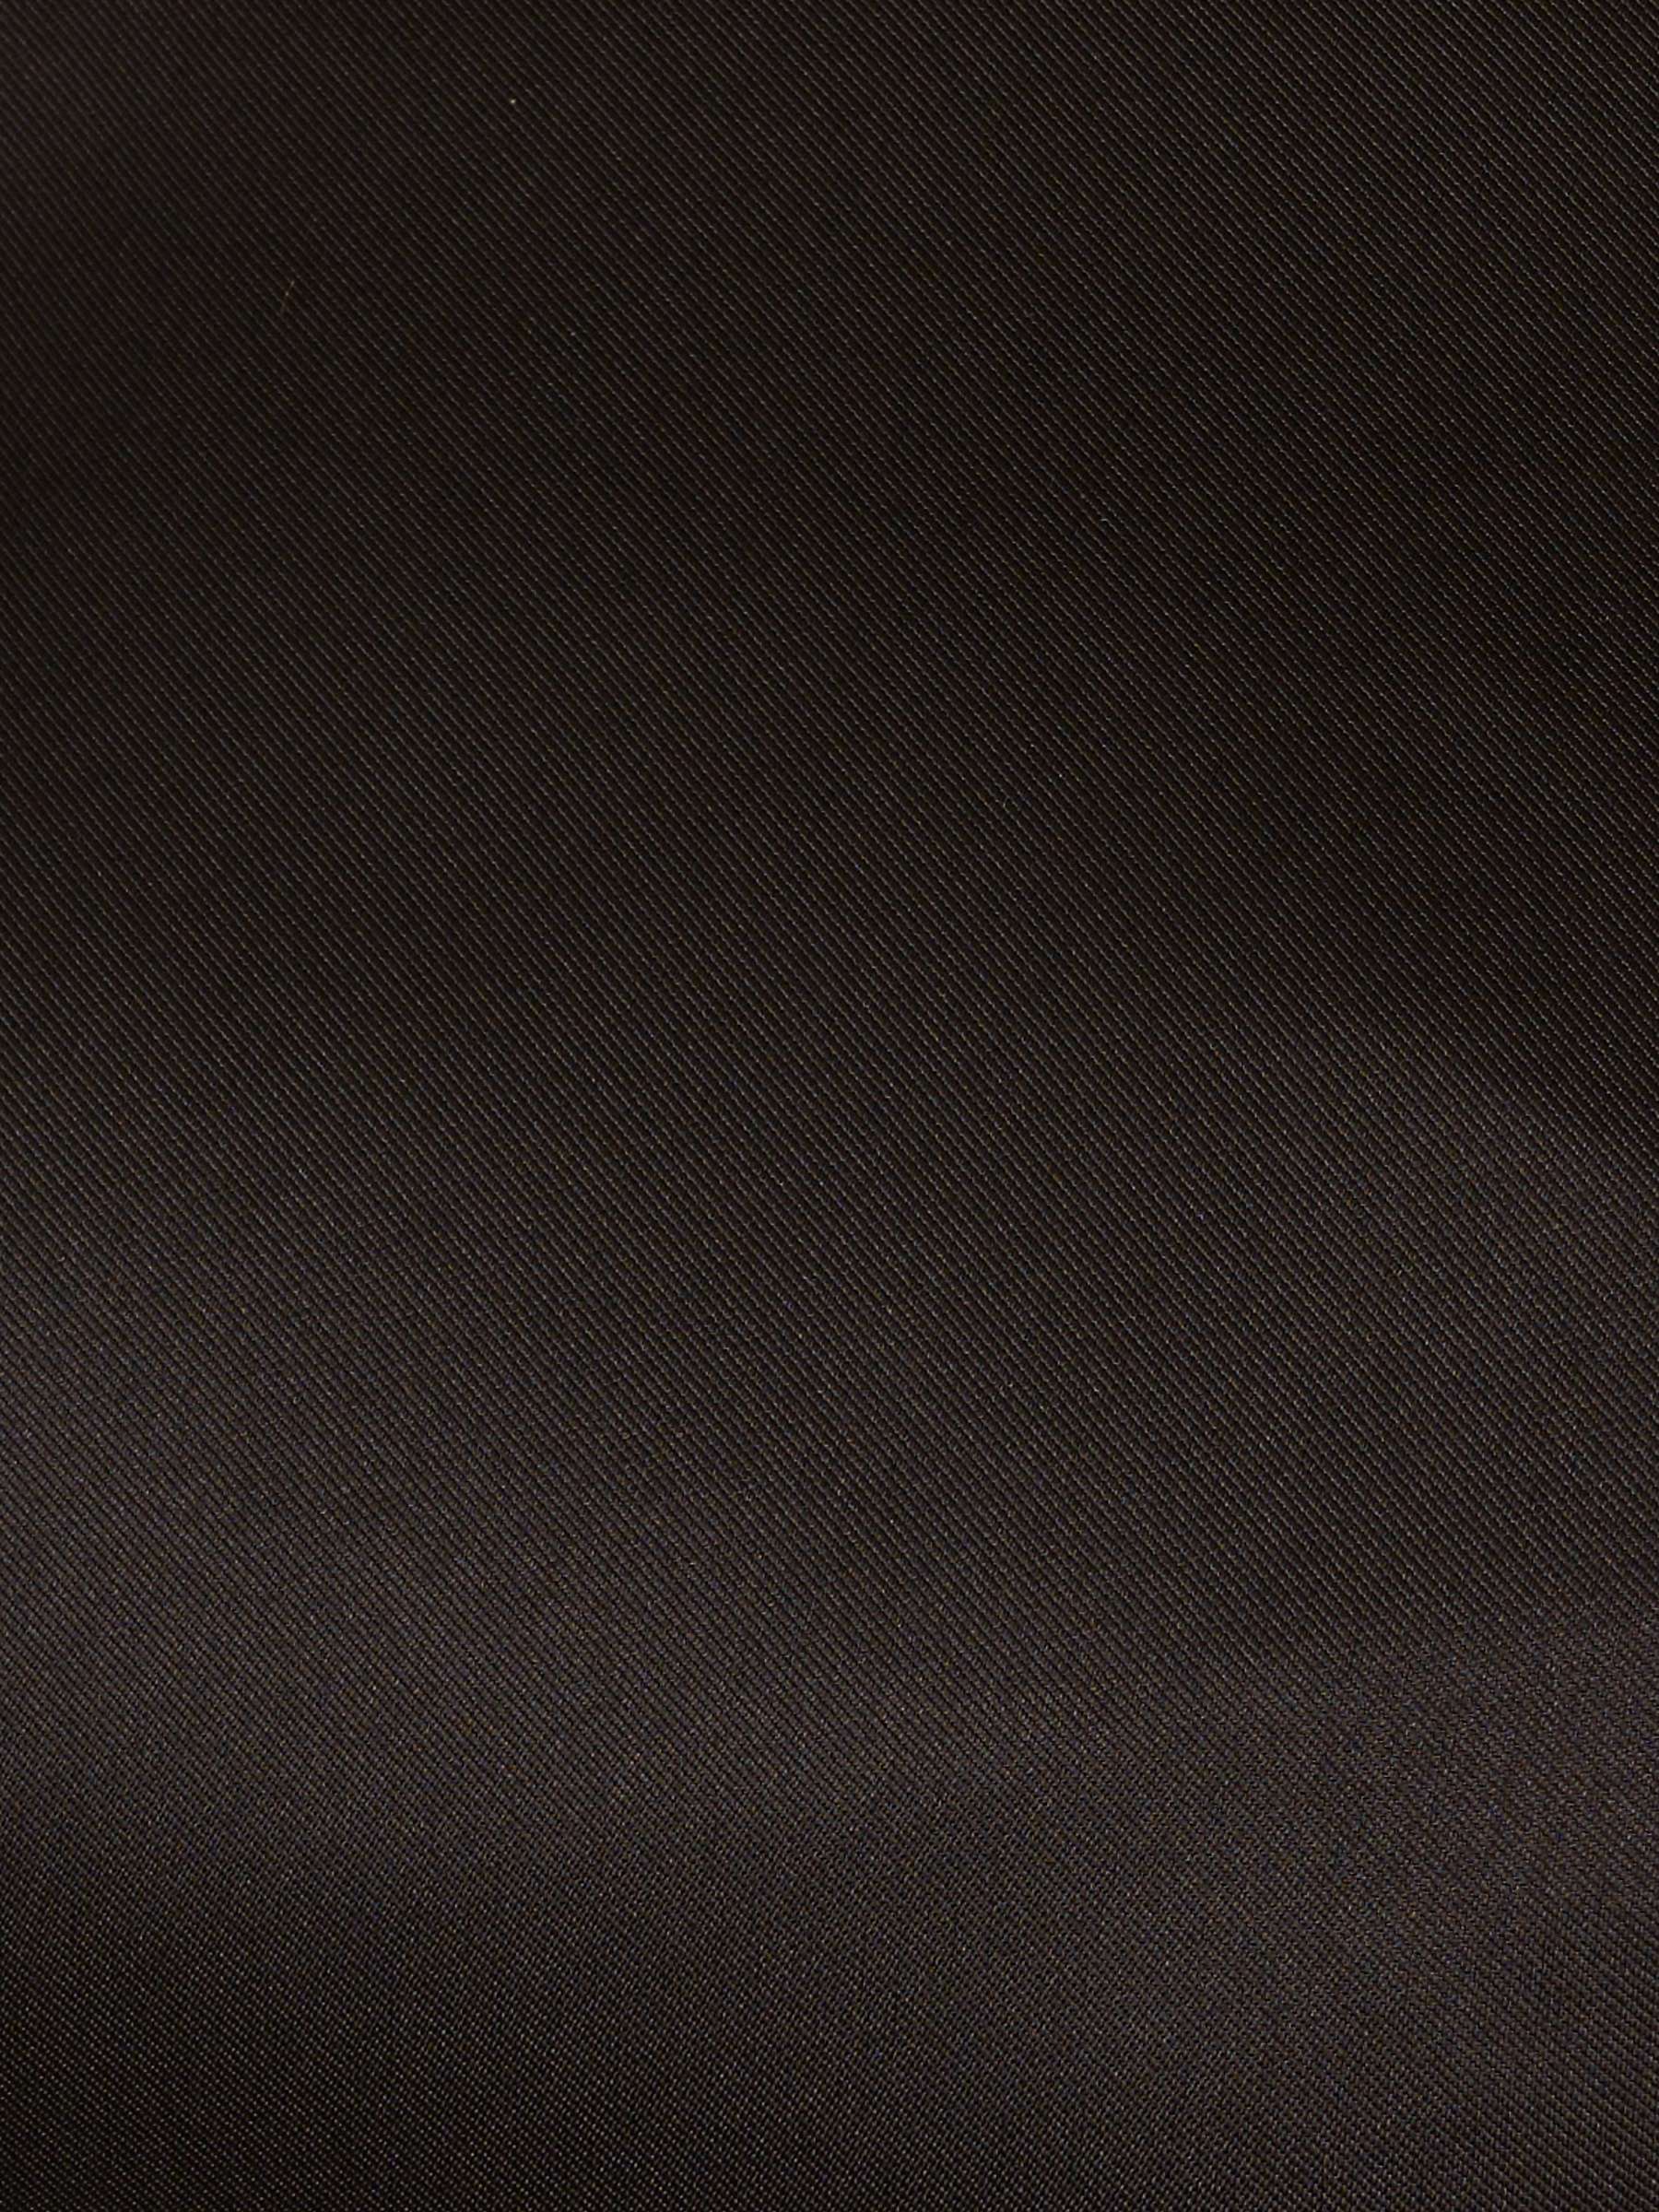 Buy Adrianna Papell Mikado Flounce Cocktail Mini Dress, Black Online at johnlewis.com